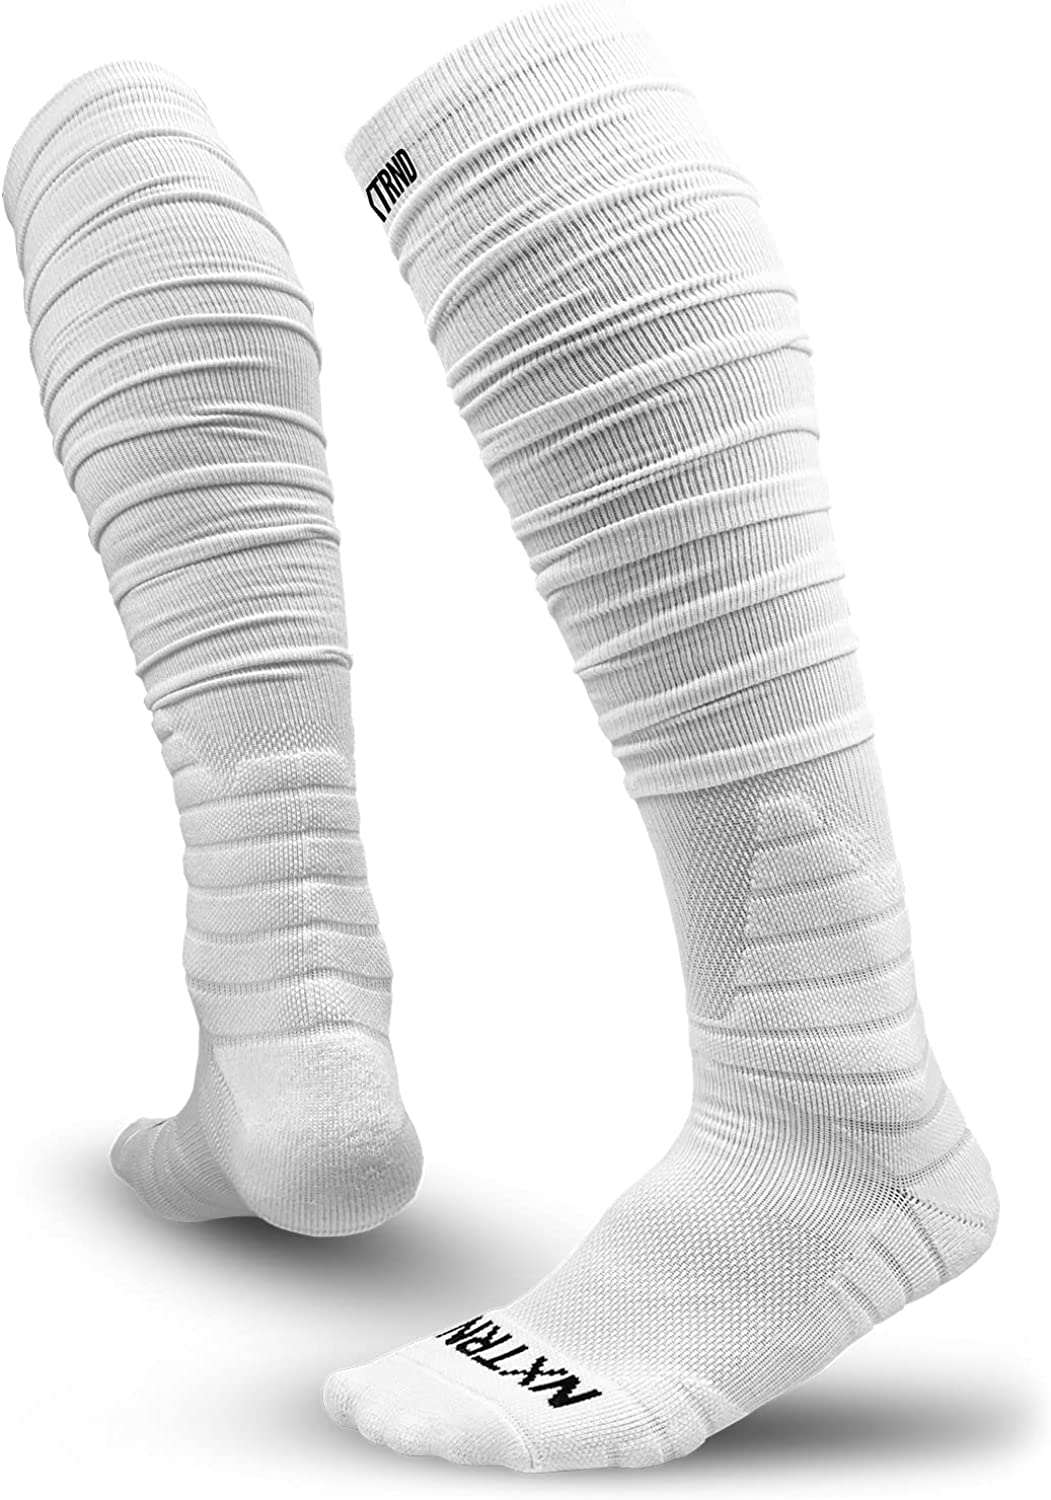 Nxtrnd Football Leg Sleeves, Calf Sleeves for Men & Boys, Sold as